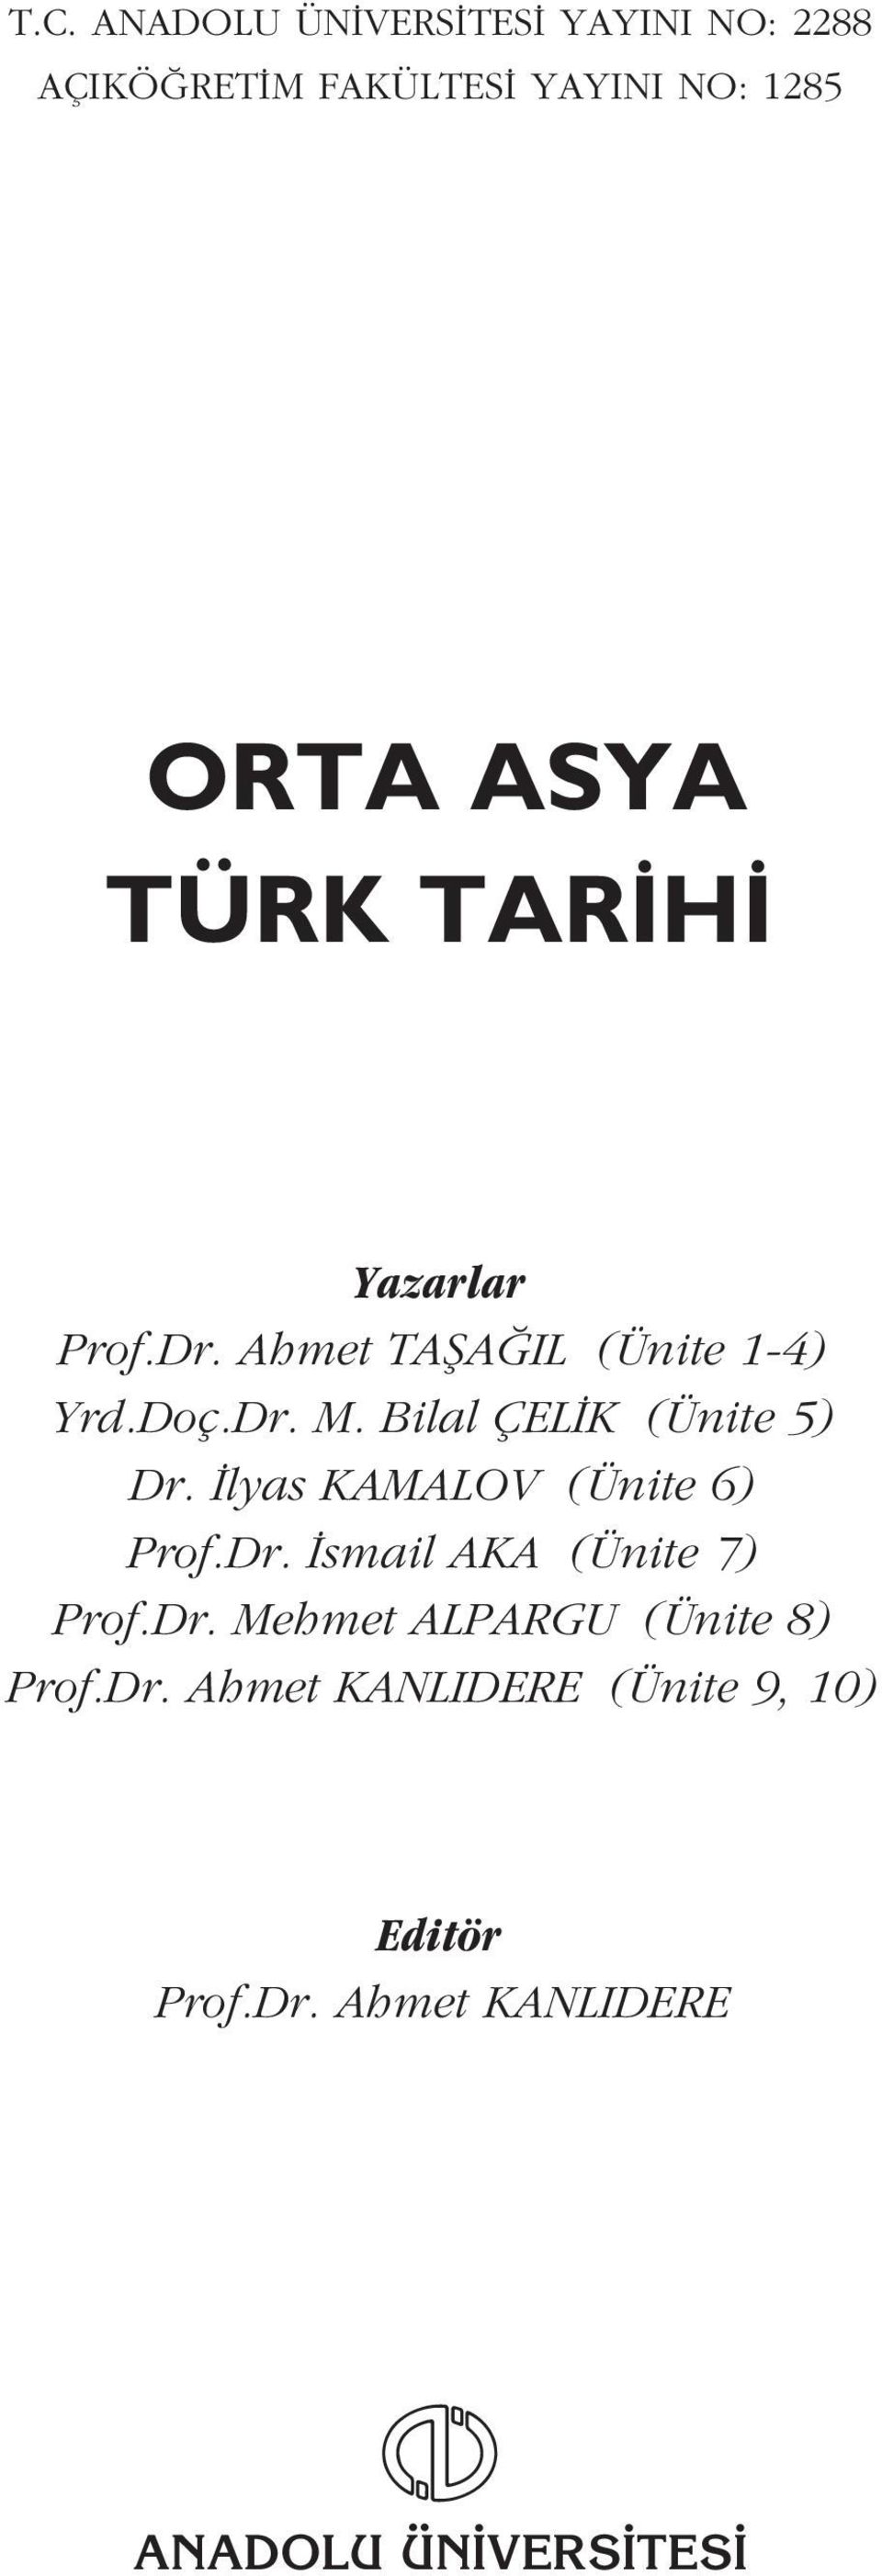 Bilal ÇEL K (Ünite 5) Dr. lyas KAMALOV (Ünite 6) Prof.Dr. smail AKA (Ünite 7) Prof.Dr. Mehmet ALPARGU (Ünite 8) Prof.